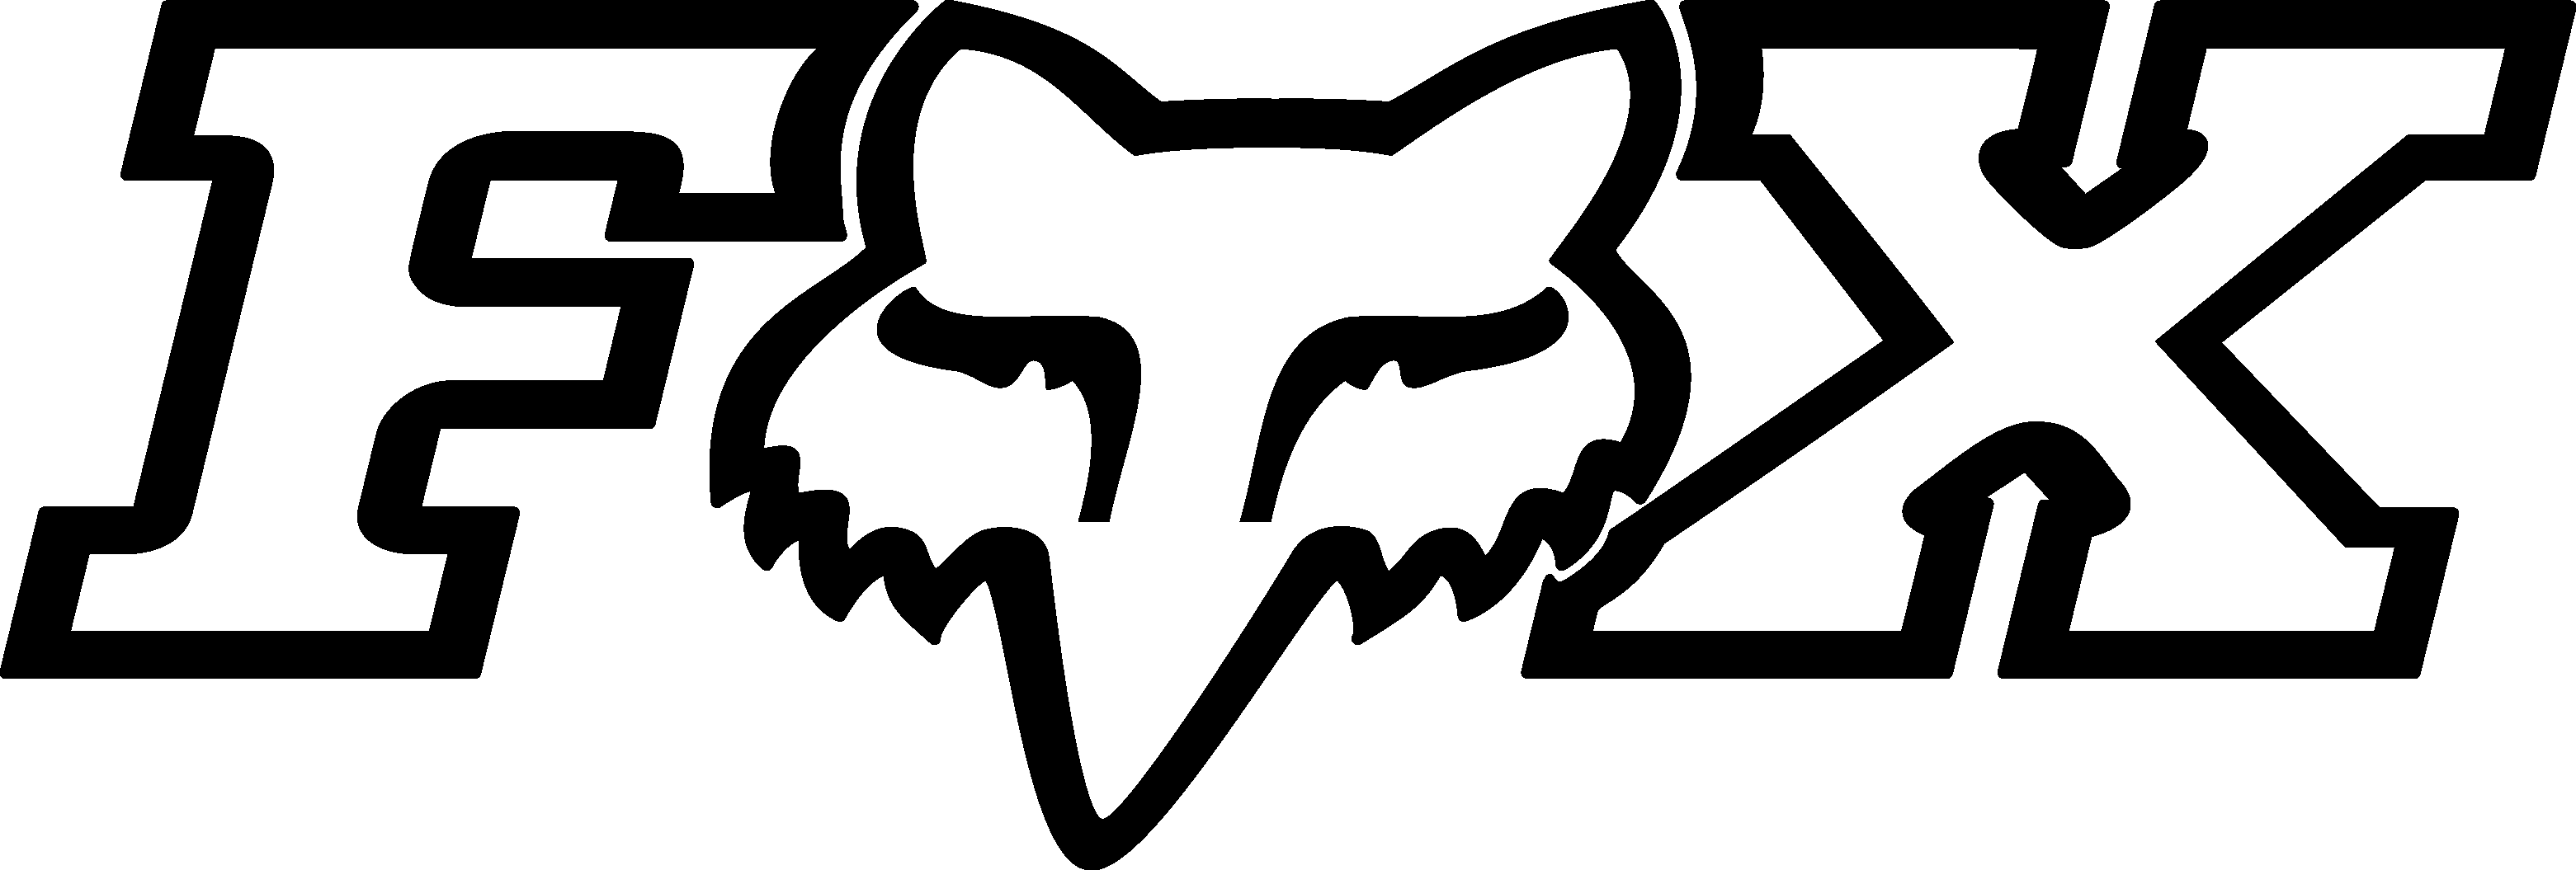 White Fox Racing Logo - Fox Racing Logo Vector Free Download